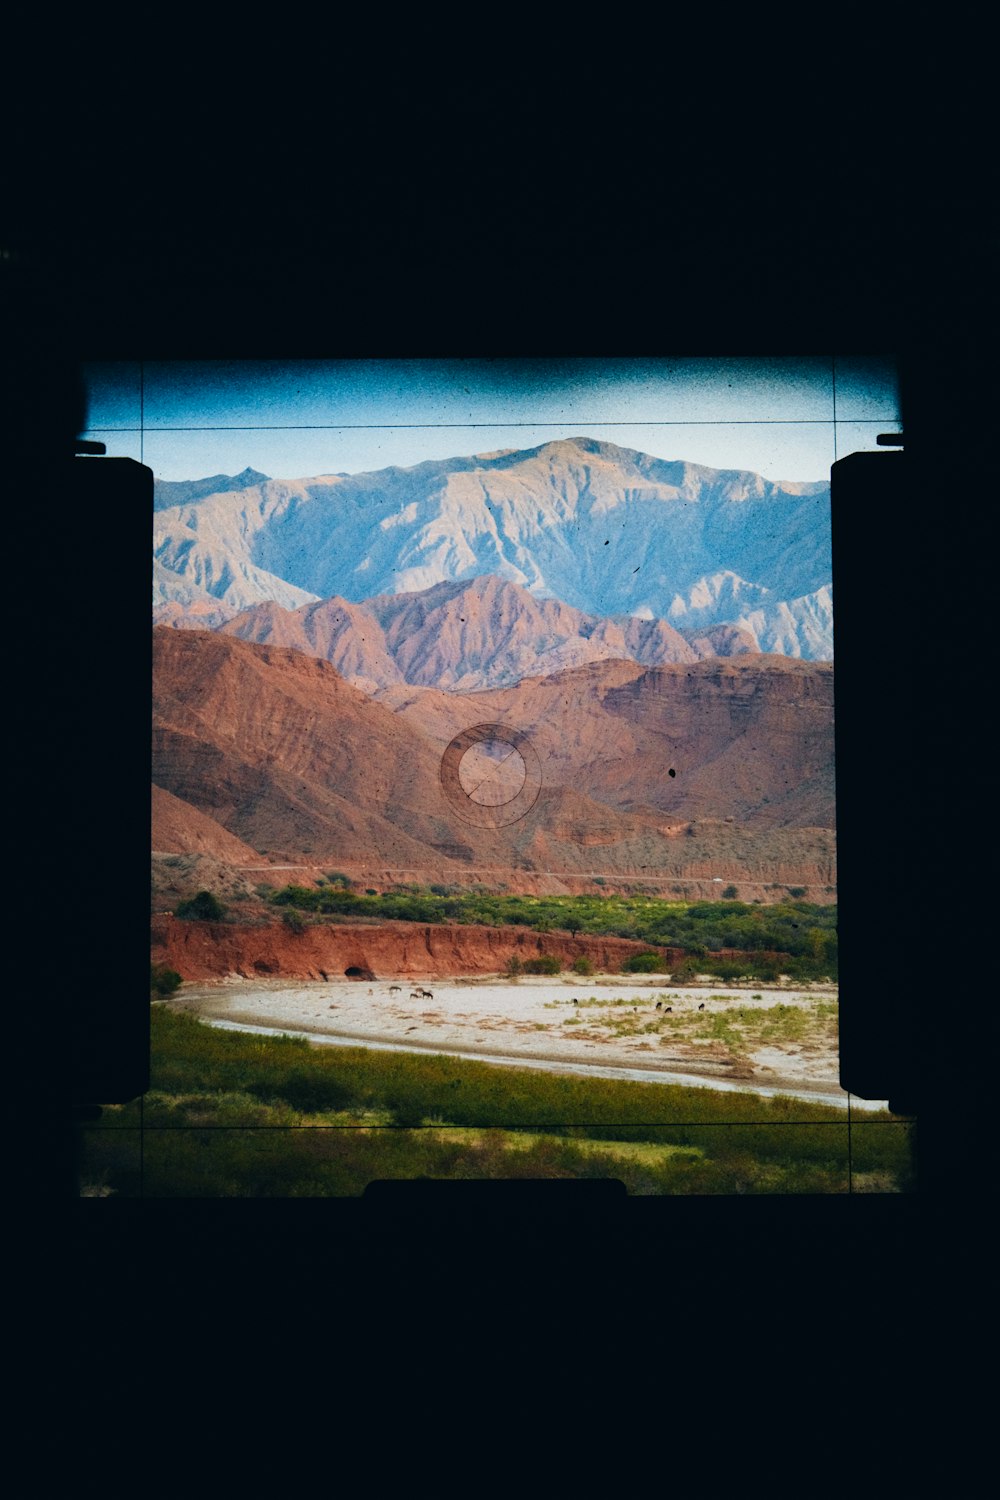 a mountain range seen from a window